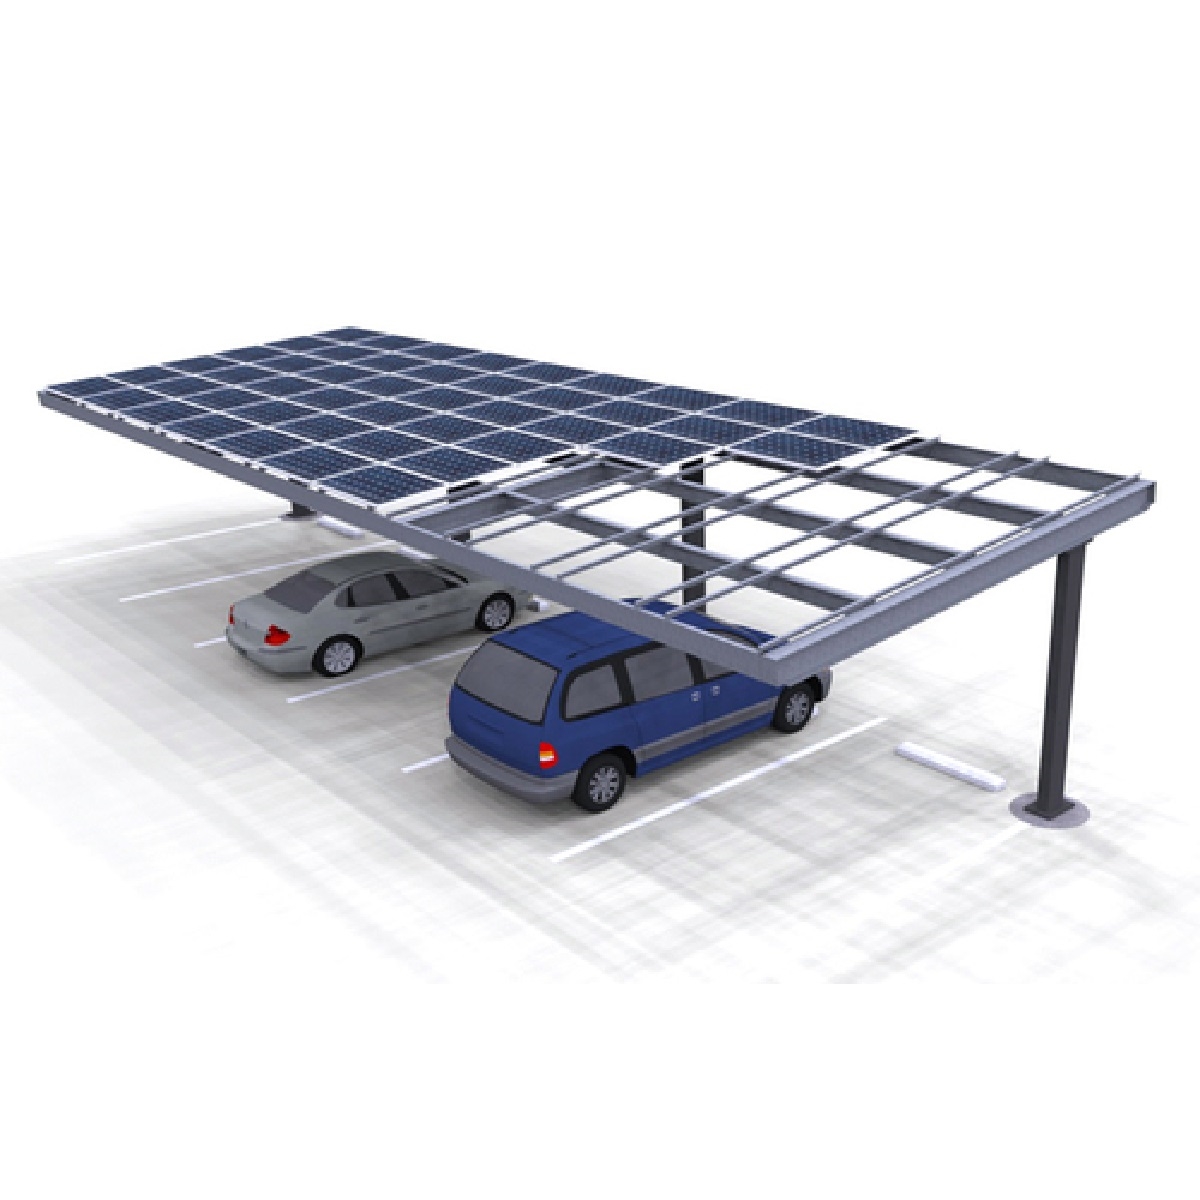 Solar Carports Solar Carports Installer Baja Carports Supplys Installs